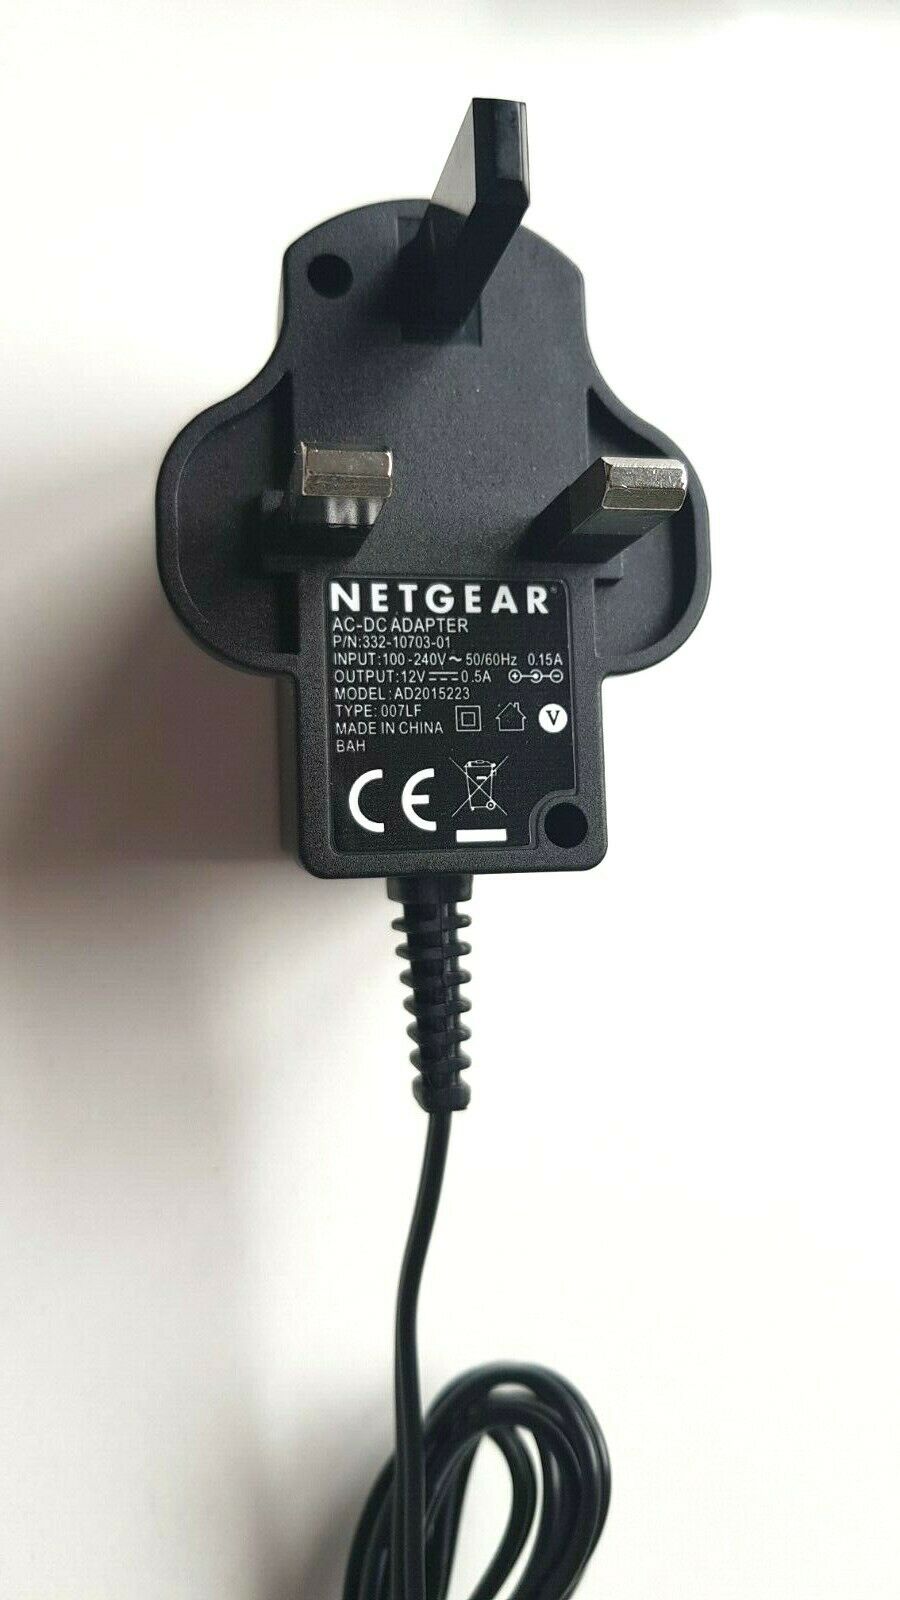 New NETGEAR AD2015223 12V 0.5A 332-10703-01 AC DC POWER ADAPTER UK PLUG - Click Image to Close